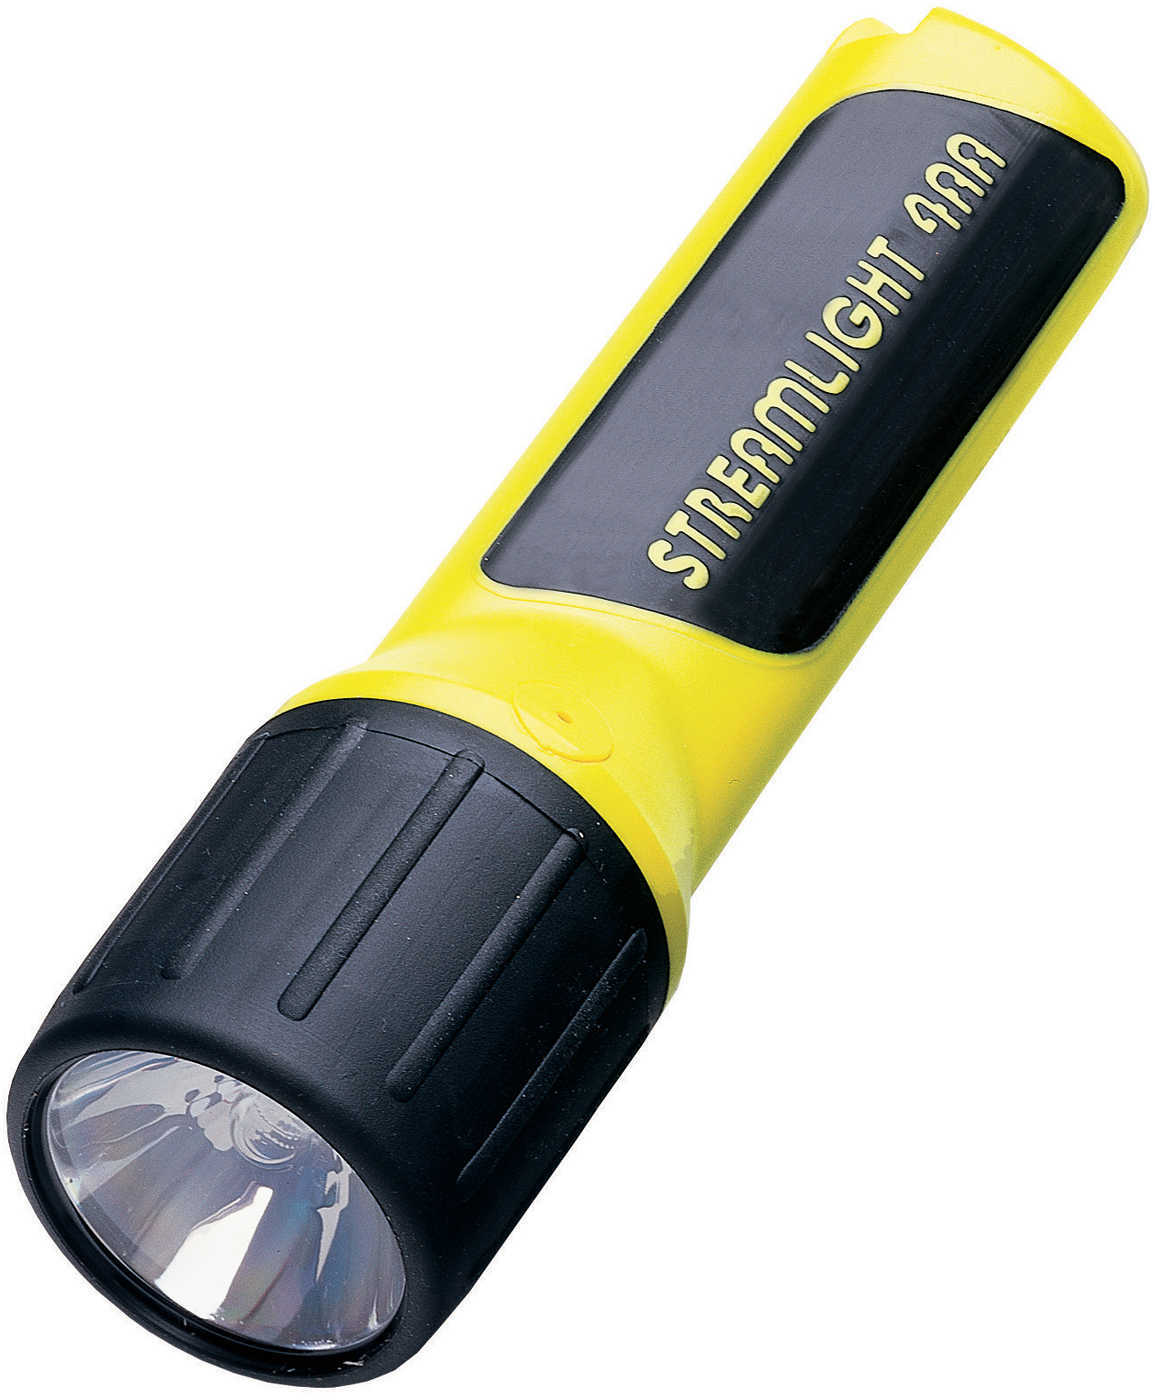 Streamlight 4AA LED w/Alkaline Batteries, Box, Yellow 68251